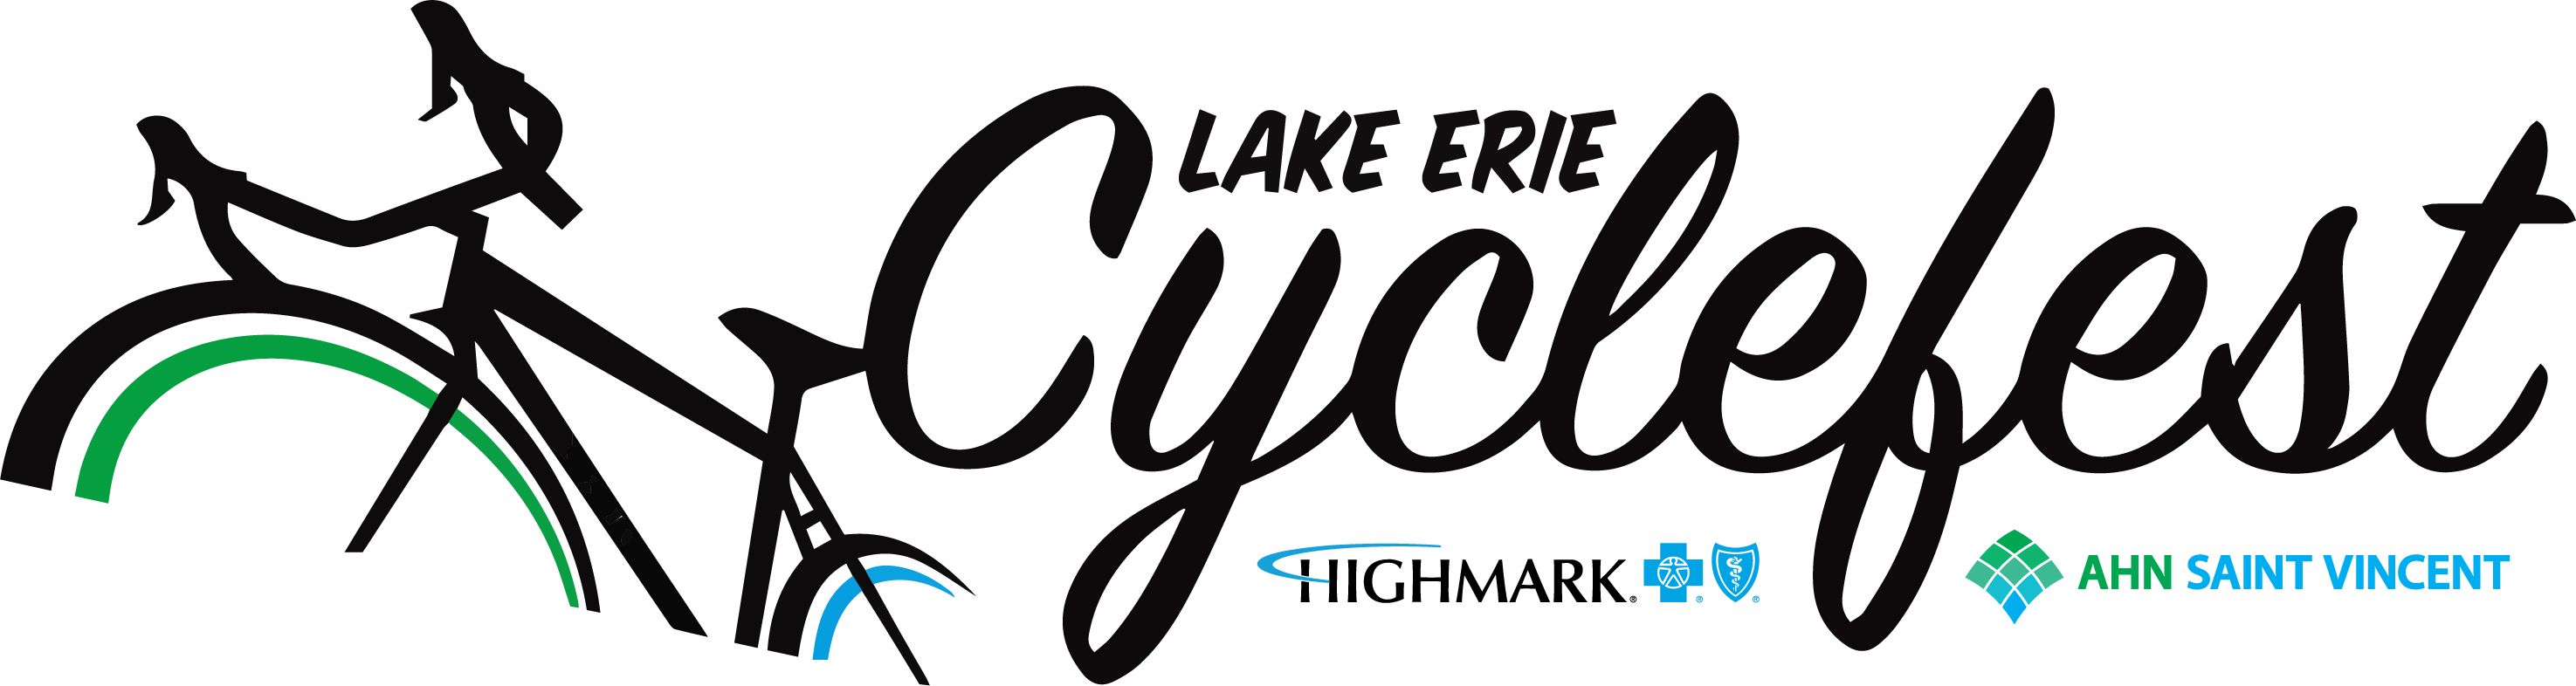 lake erie cyclefest logo 2022 horizontal